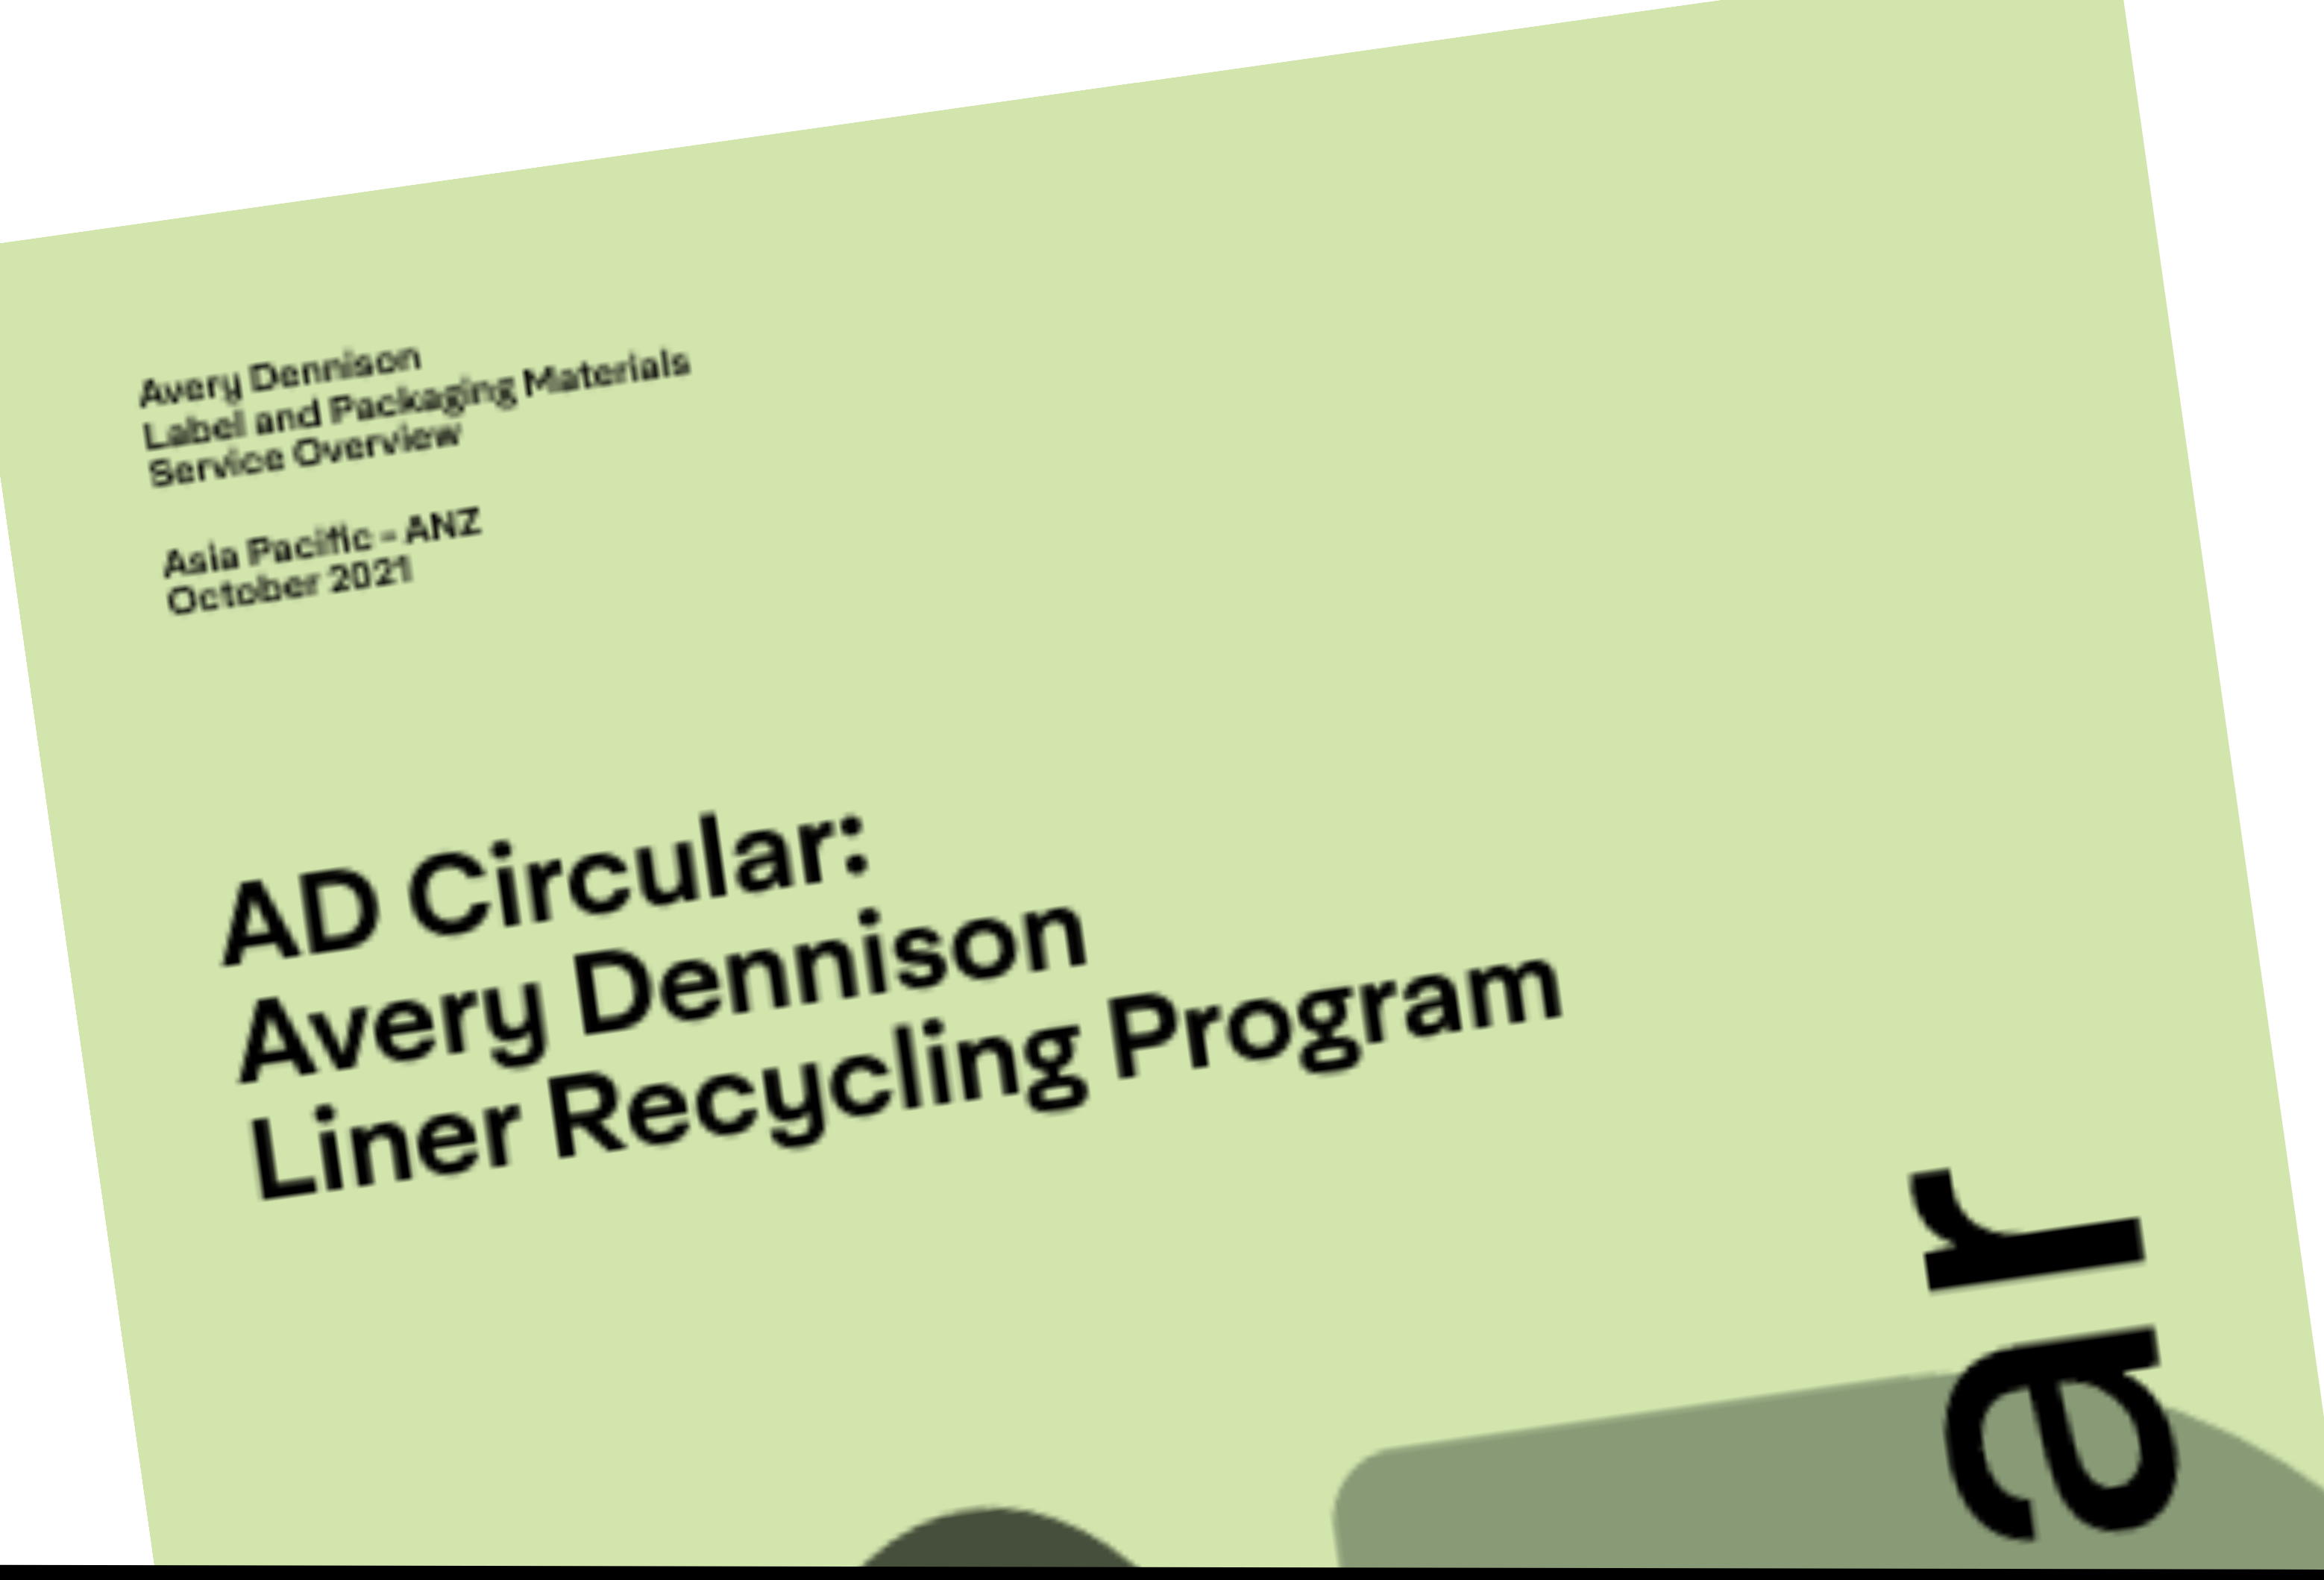 AD Circular: Avery Dennison Liner Recycling Program